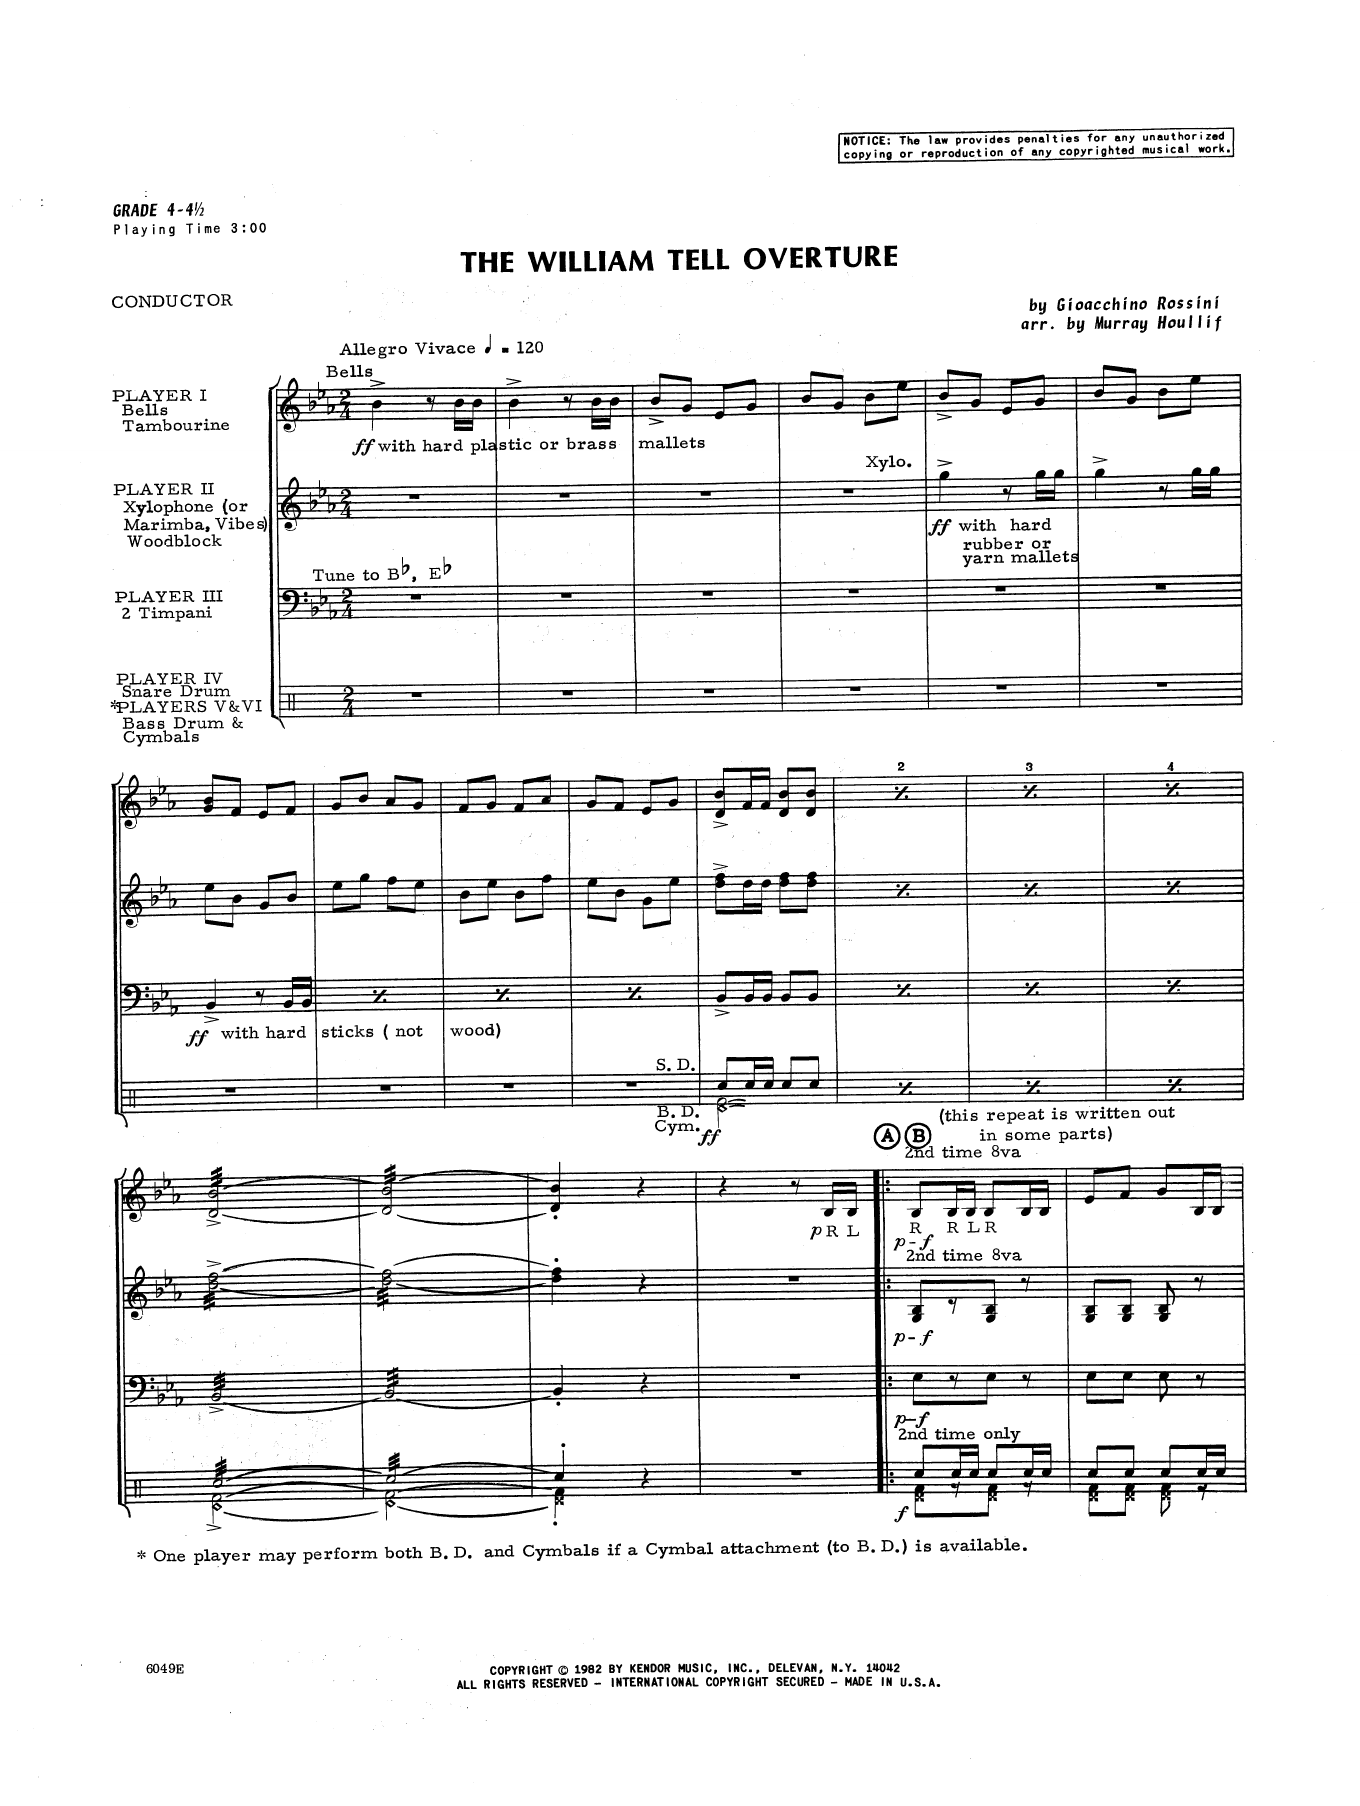 Download Murray Houllif The William Tell Overture - Full Score Sheet Music